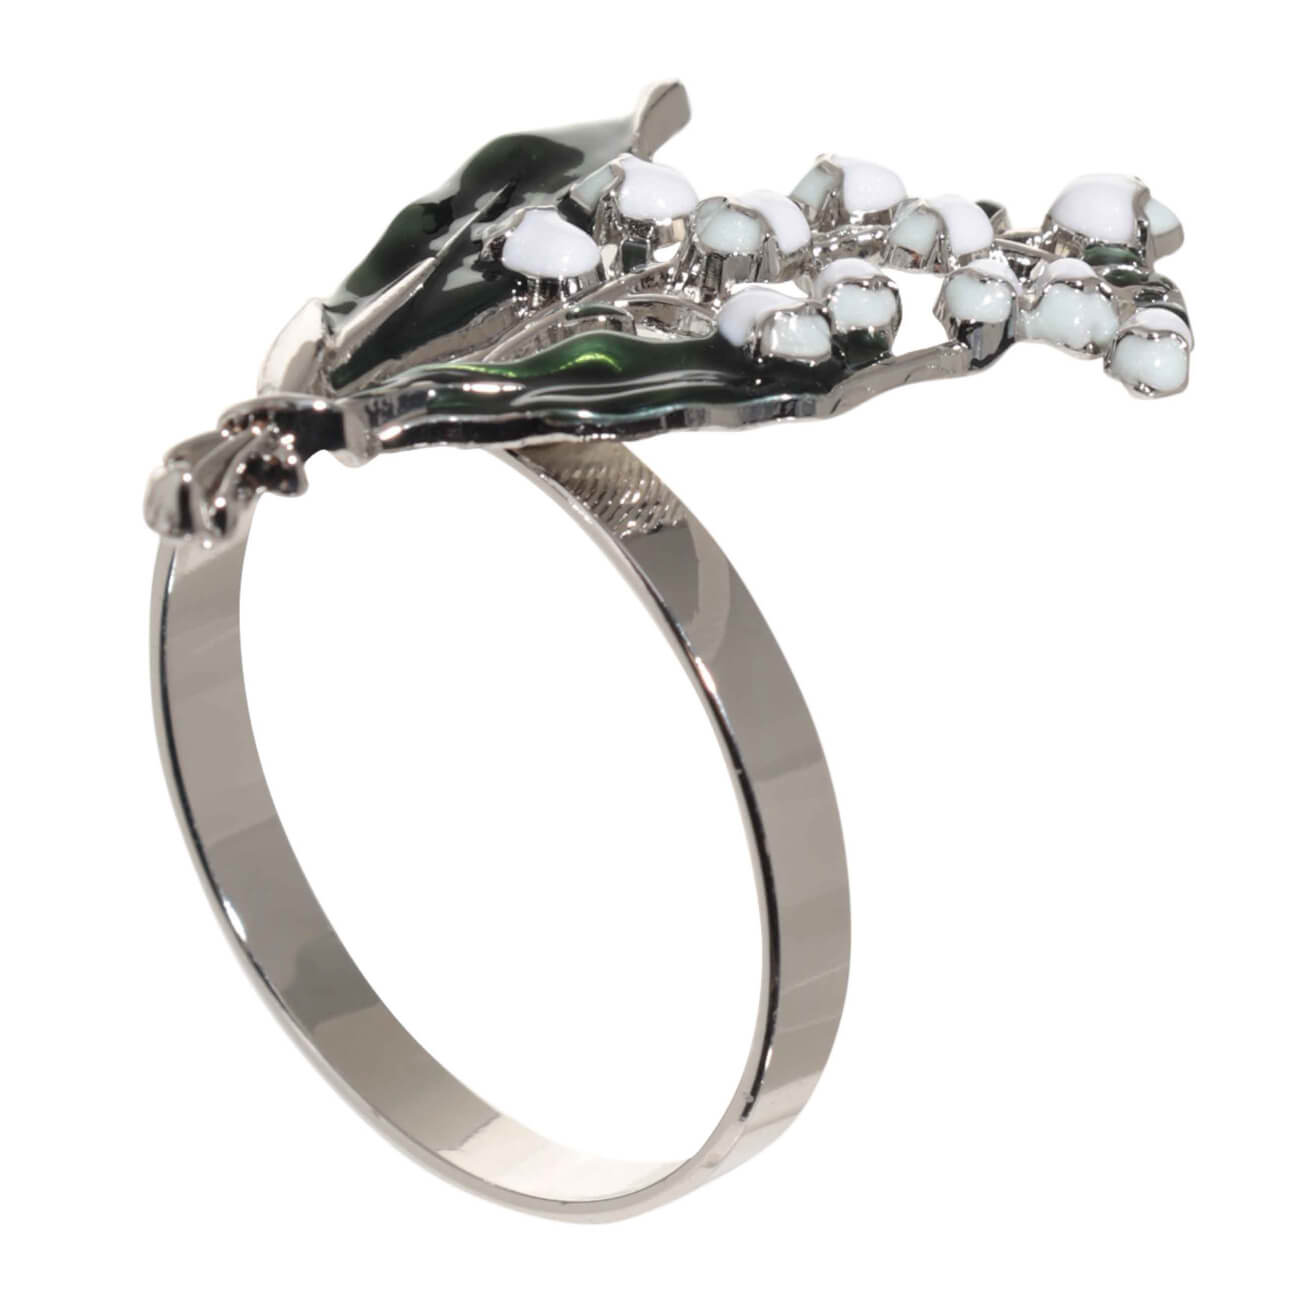 Кольцо для салфеток, 5 см, металл, зелено-серебристое, Ландыш с листьями, May-lily кольцо для салфеток 5 см 2 шт металл серебристое перо feather